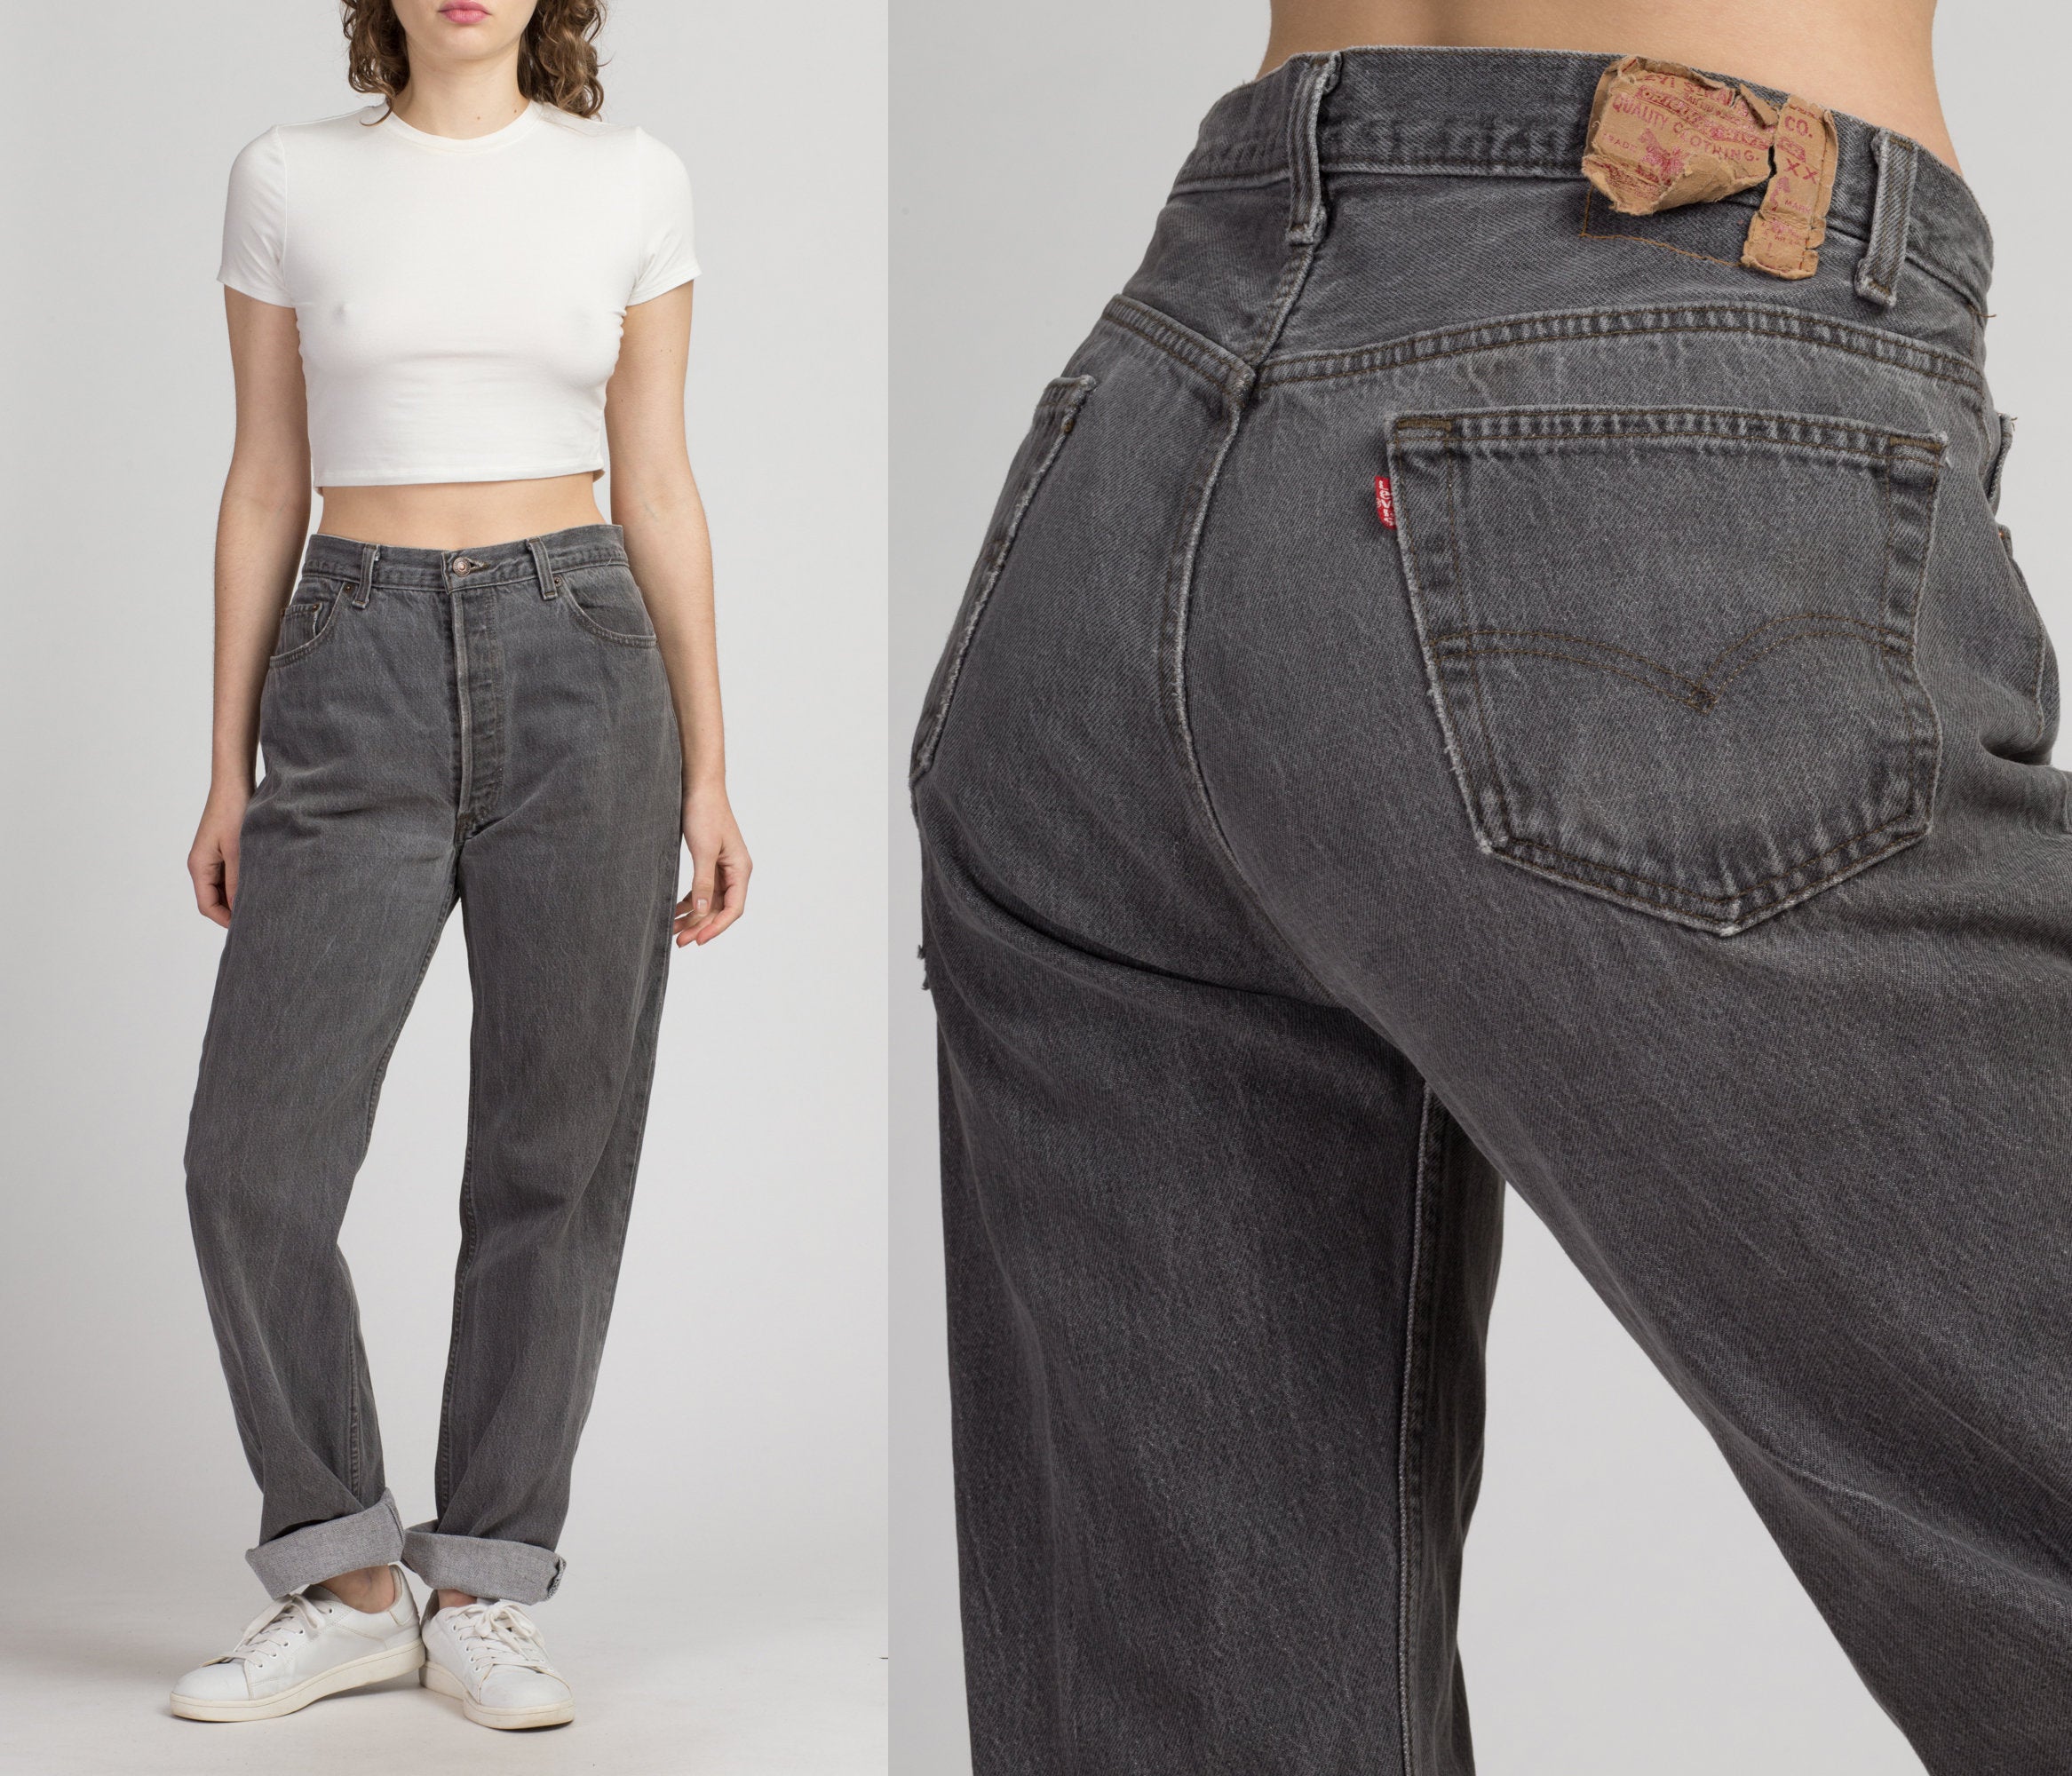 Details more than 181 vintage denim jeans womens